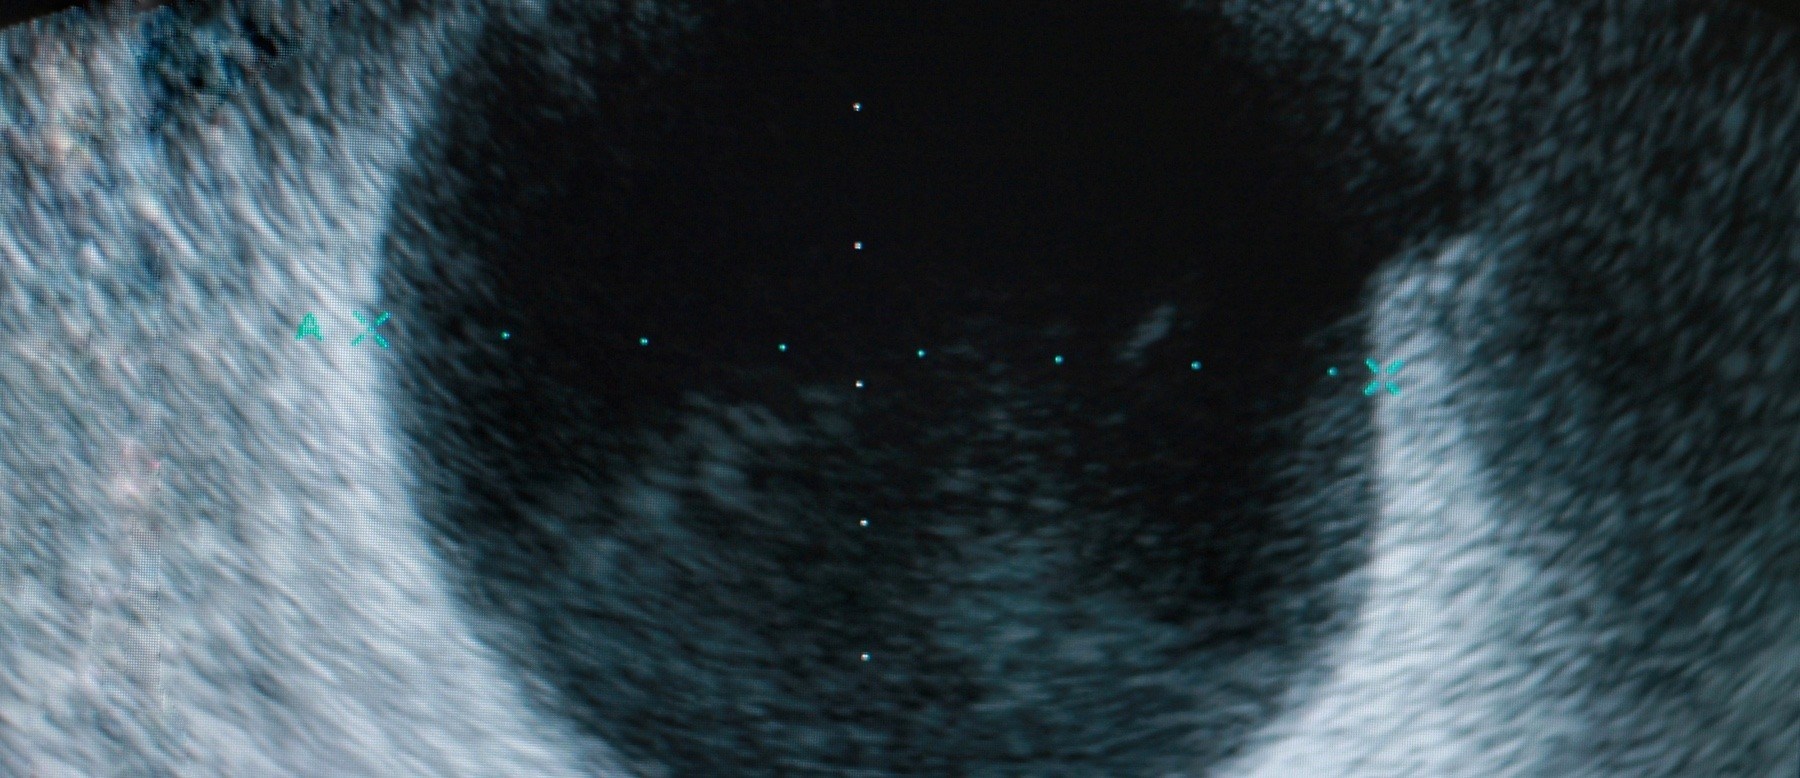 Ovarian cyst scan